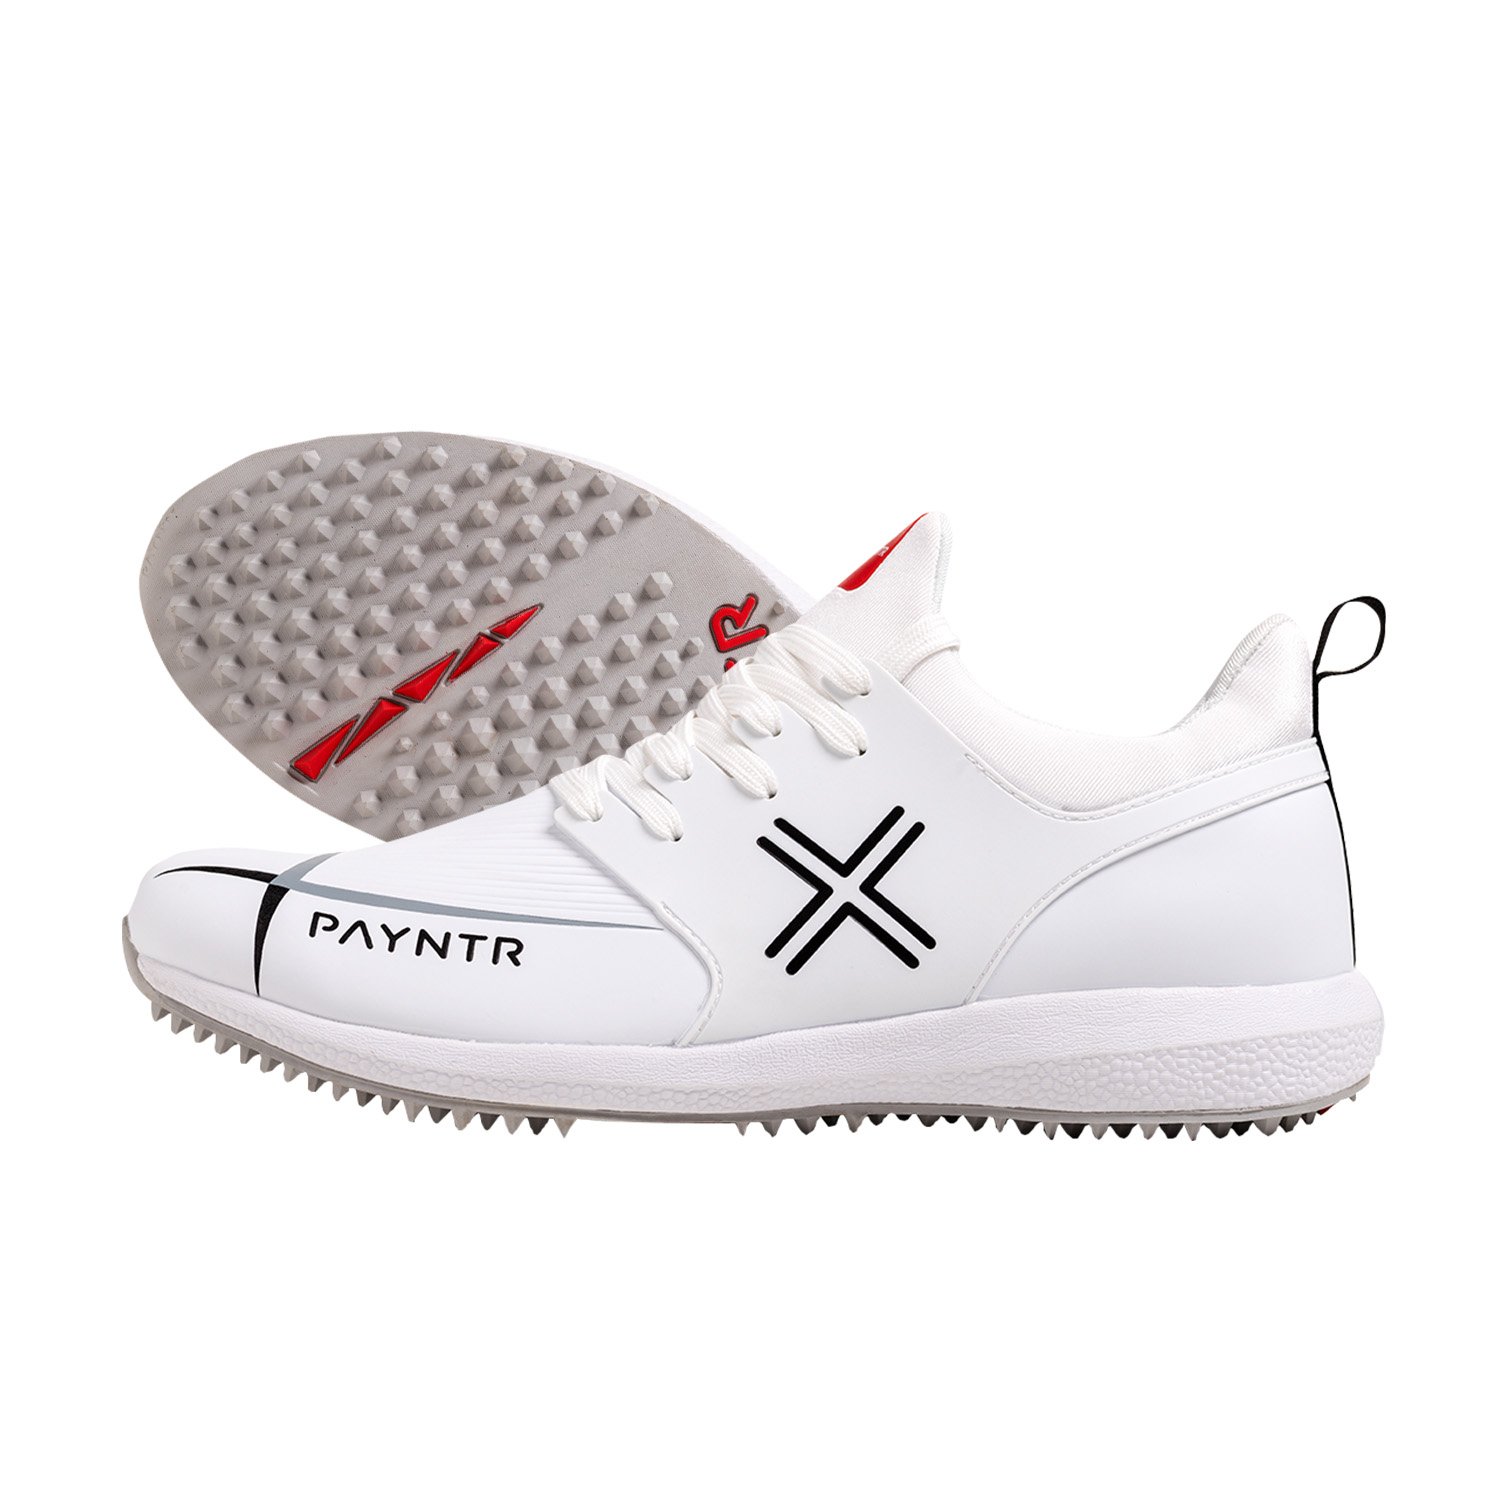 payntr x cricket shoes